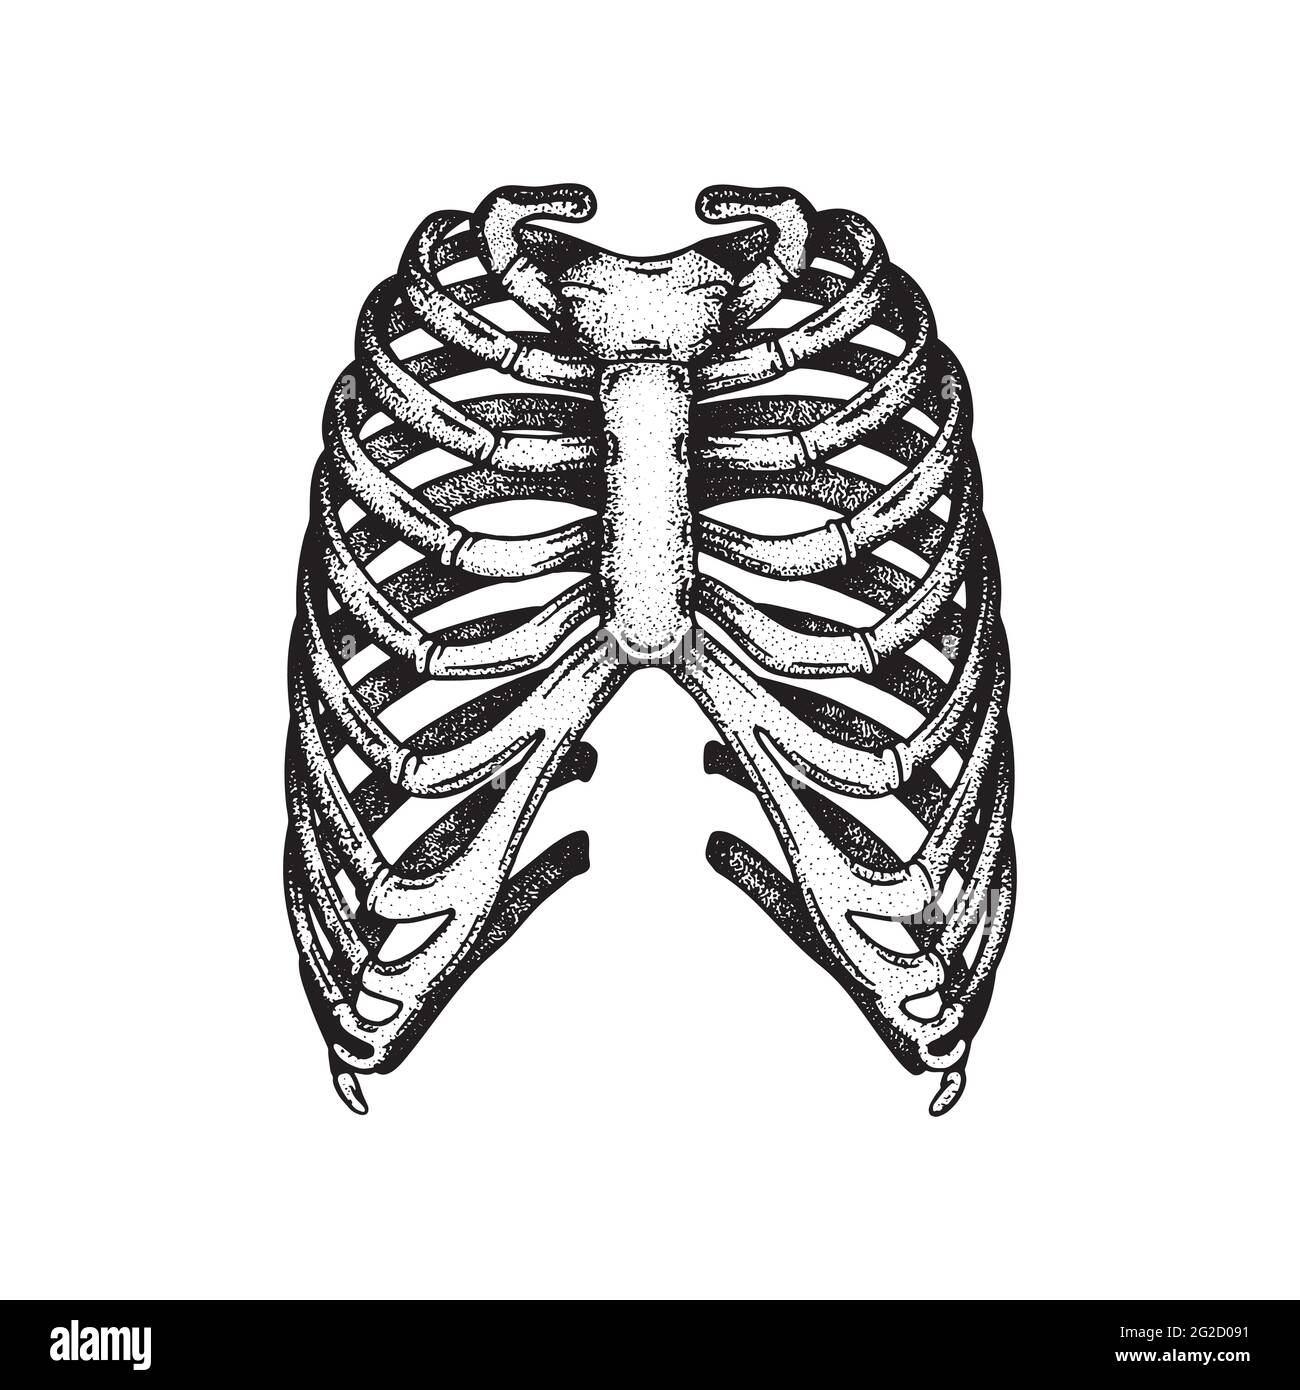 Human ribs. Human rib bones hand drawn vector illustration. Part of human skeleton graphic. Stock Vector